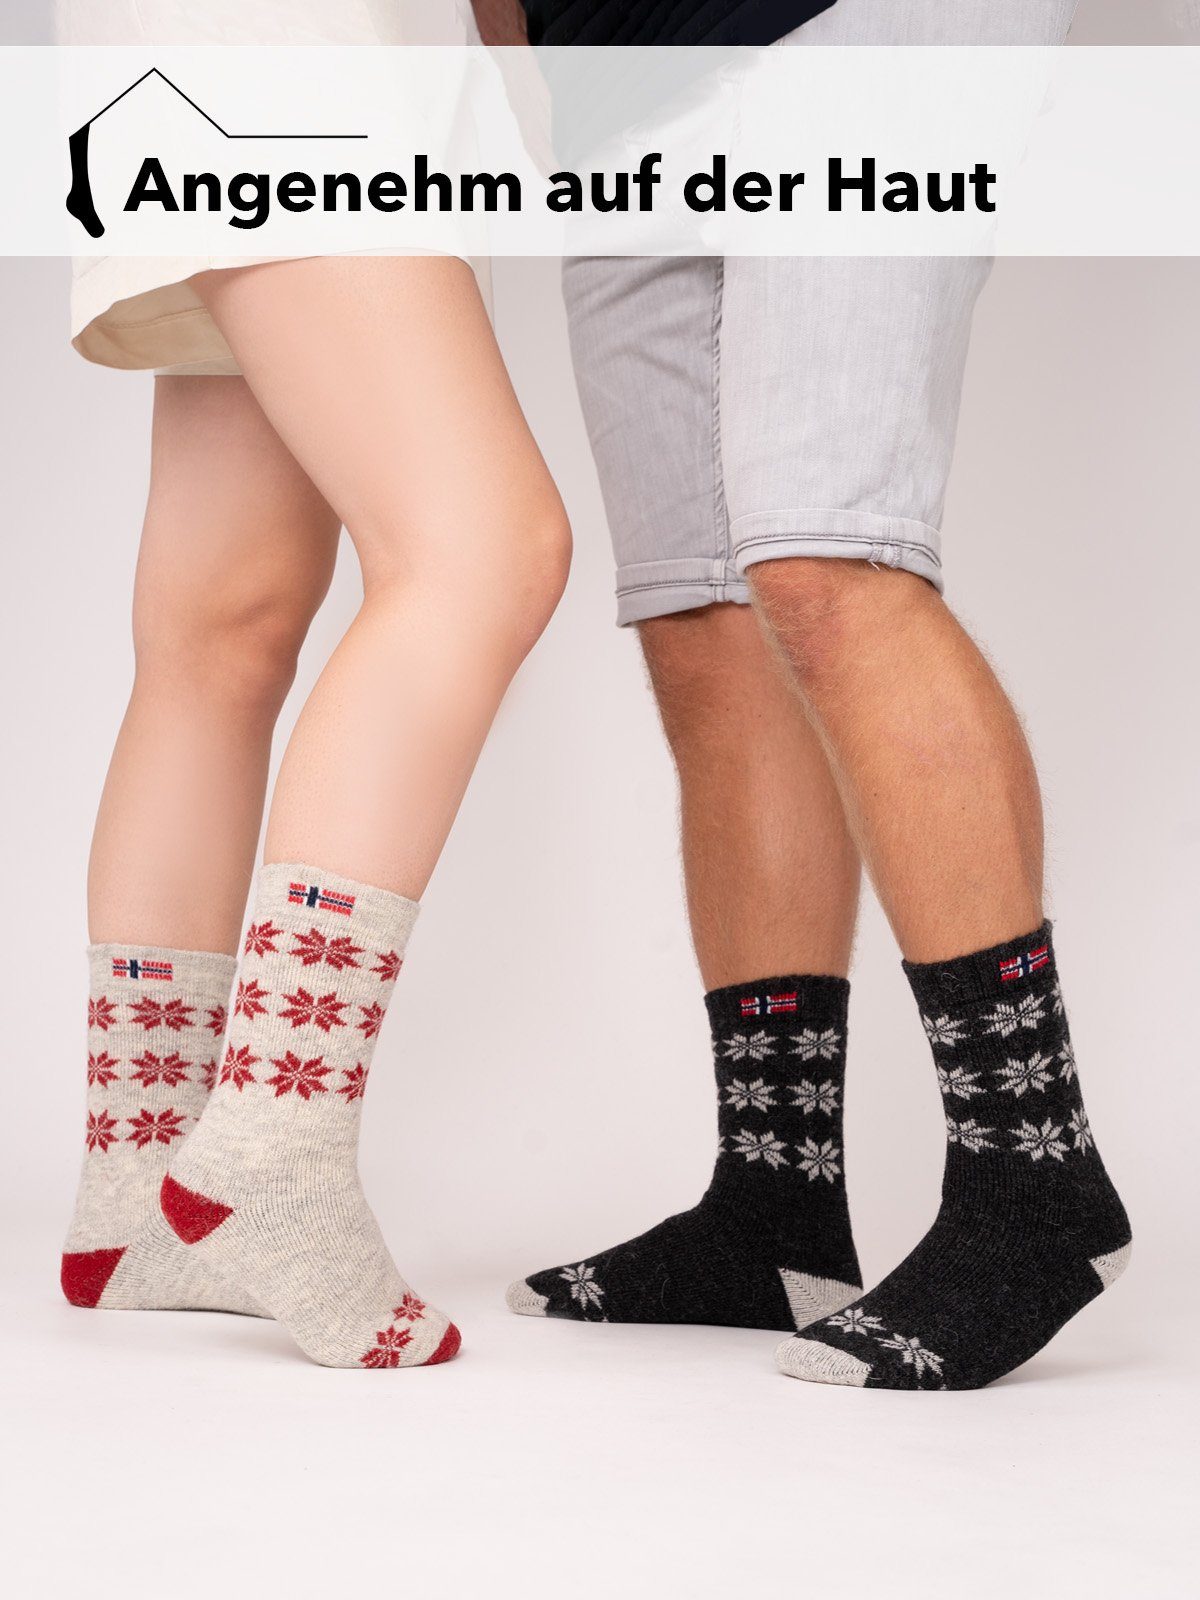 HomeOfSocks Socken Hyggelig Wollsocke Hoher Rot Nordic Dicke Socken Warm Skandinavische Design Norwegischem Wollanteil "Snowflake 80% Kuschelsocken Norwegen"